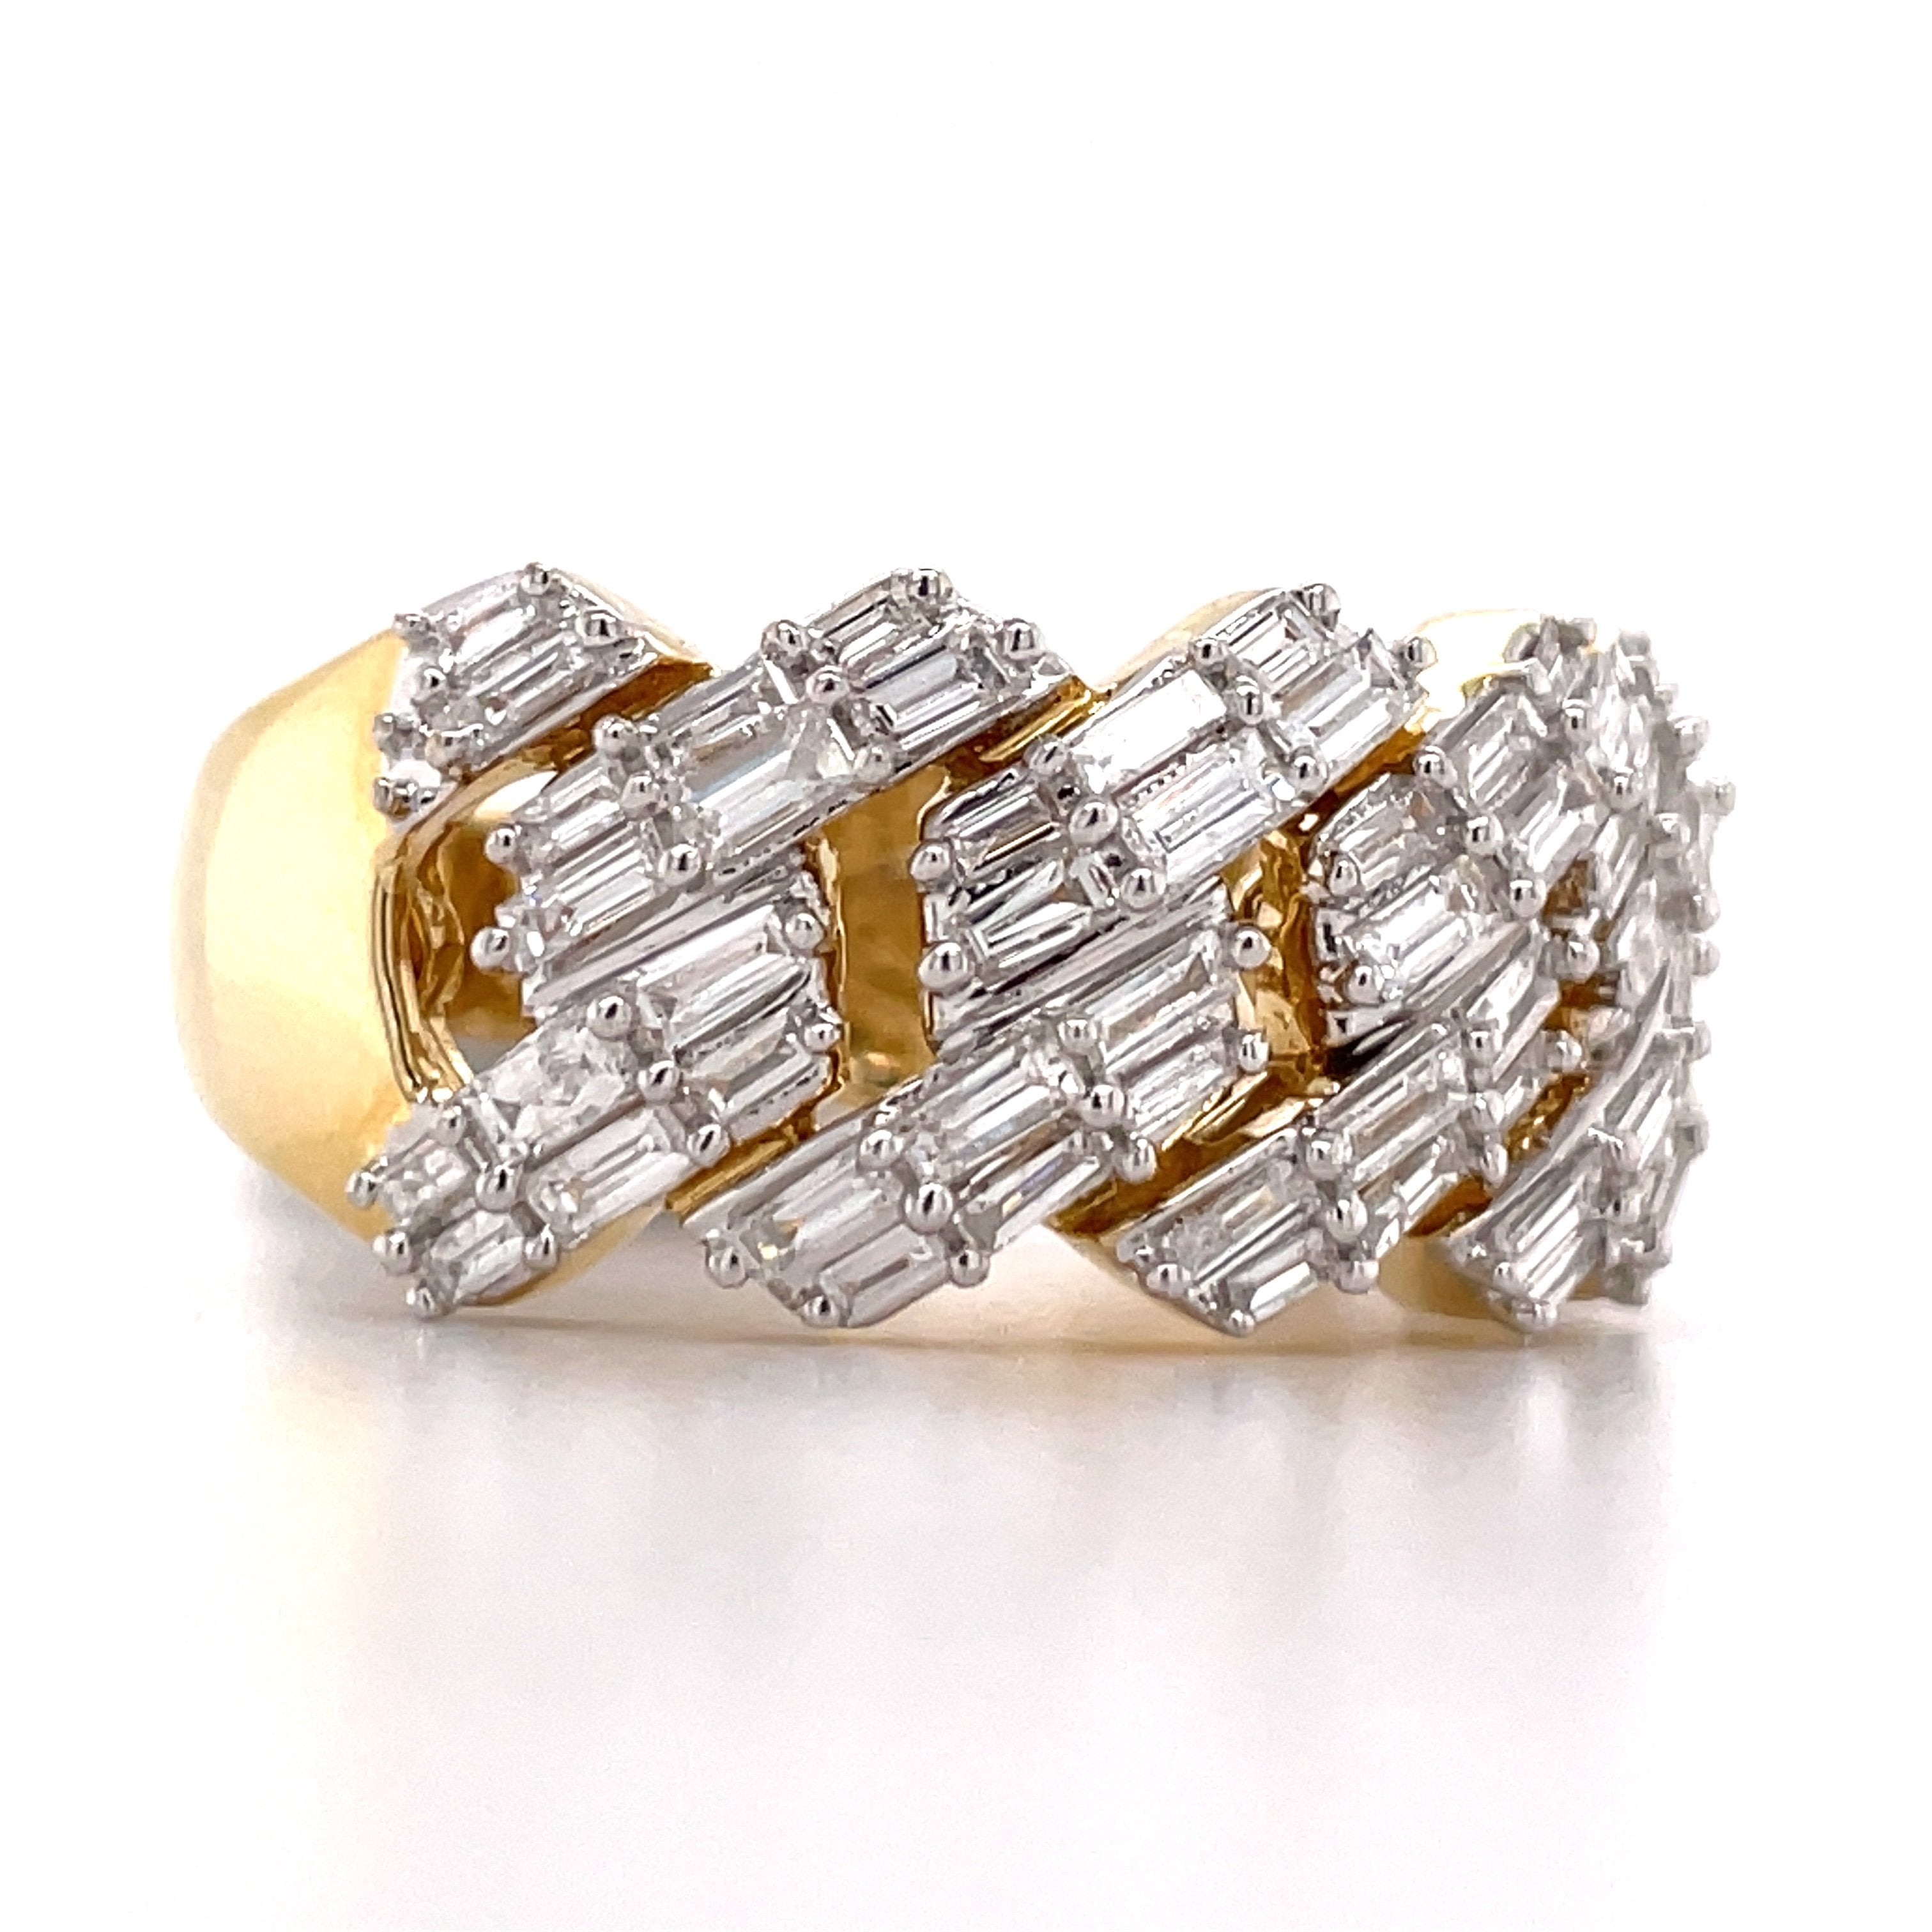 1.46 CT. Diamond Ring in 10K Gold - White Carat - USA & Canada